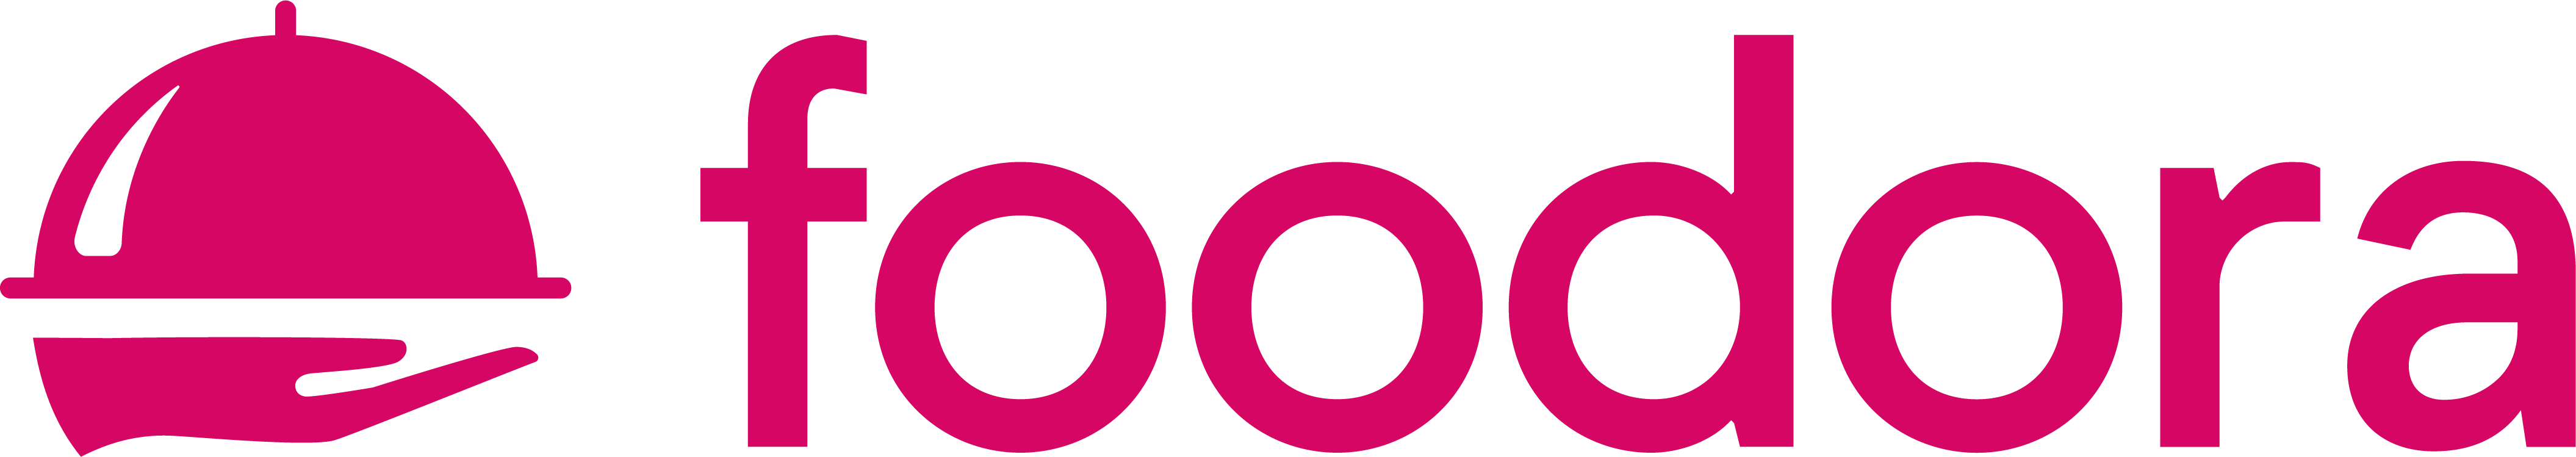 Foodoras logotyp